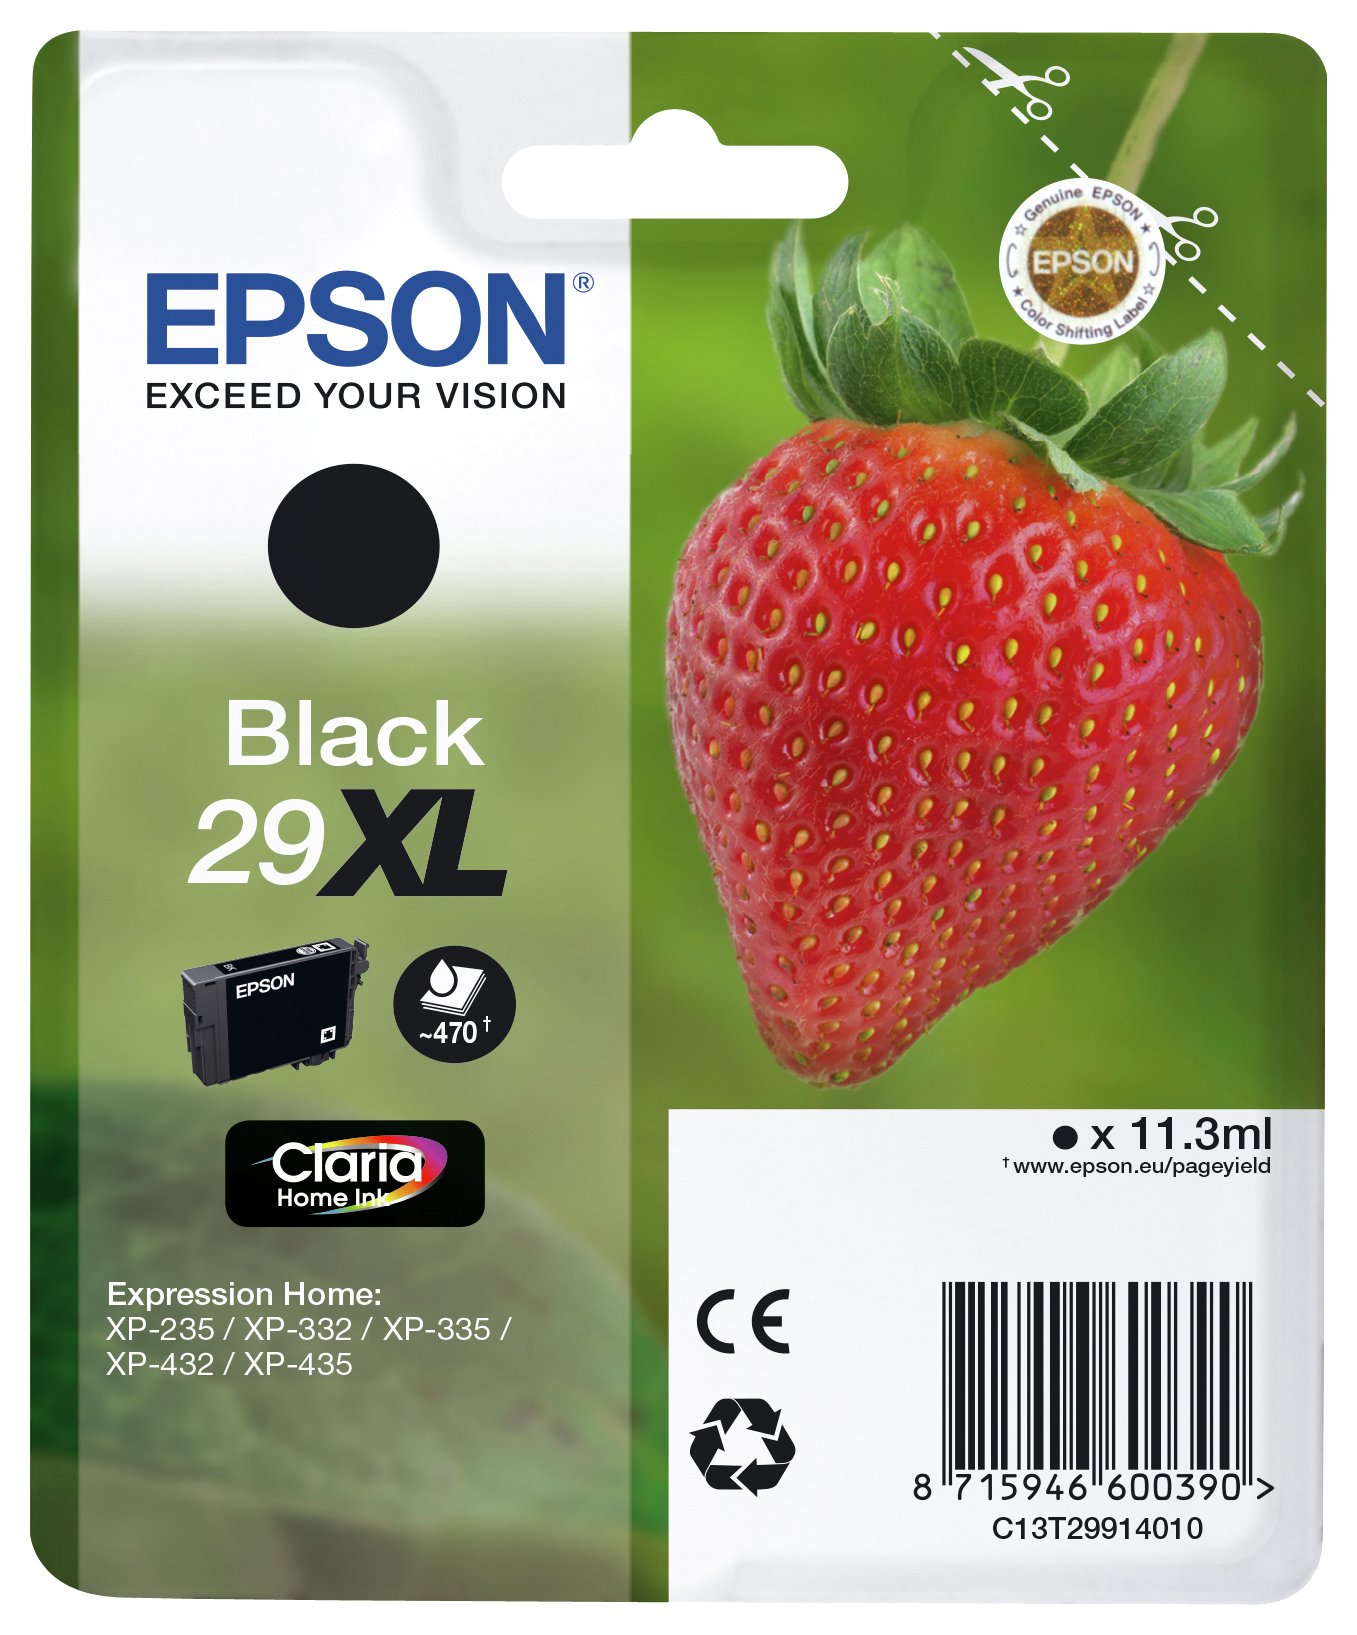 Epson Strawberry 29XL Black Ink Cartridge review